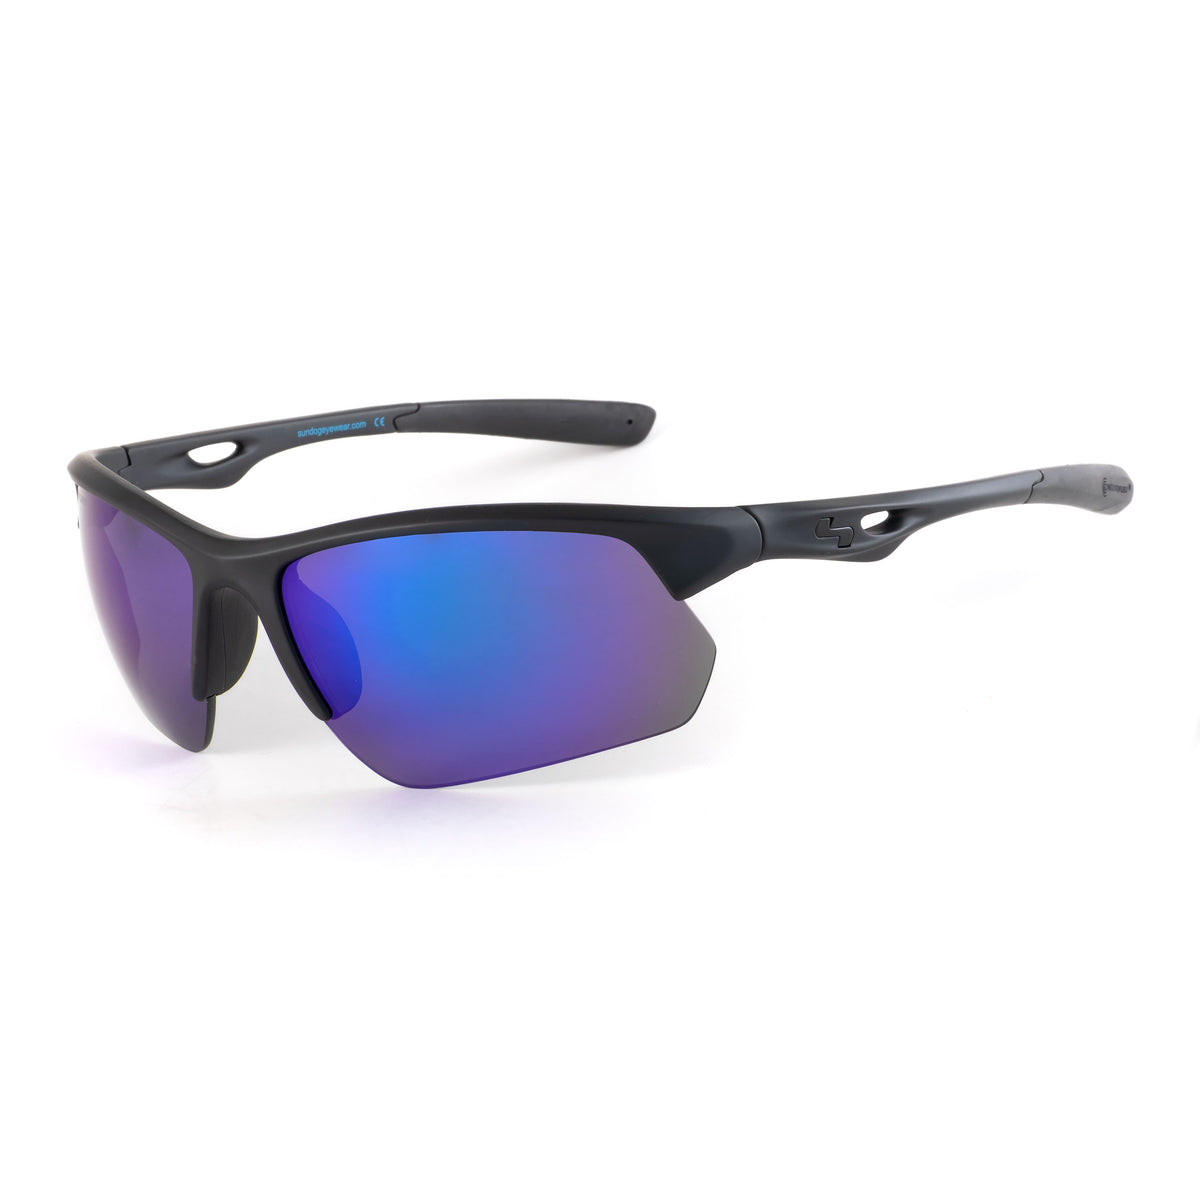 Sundog Prime EXT Sunglasses with TrueBlue Lenses